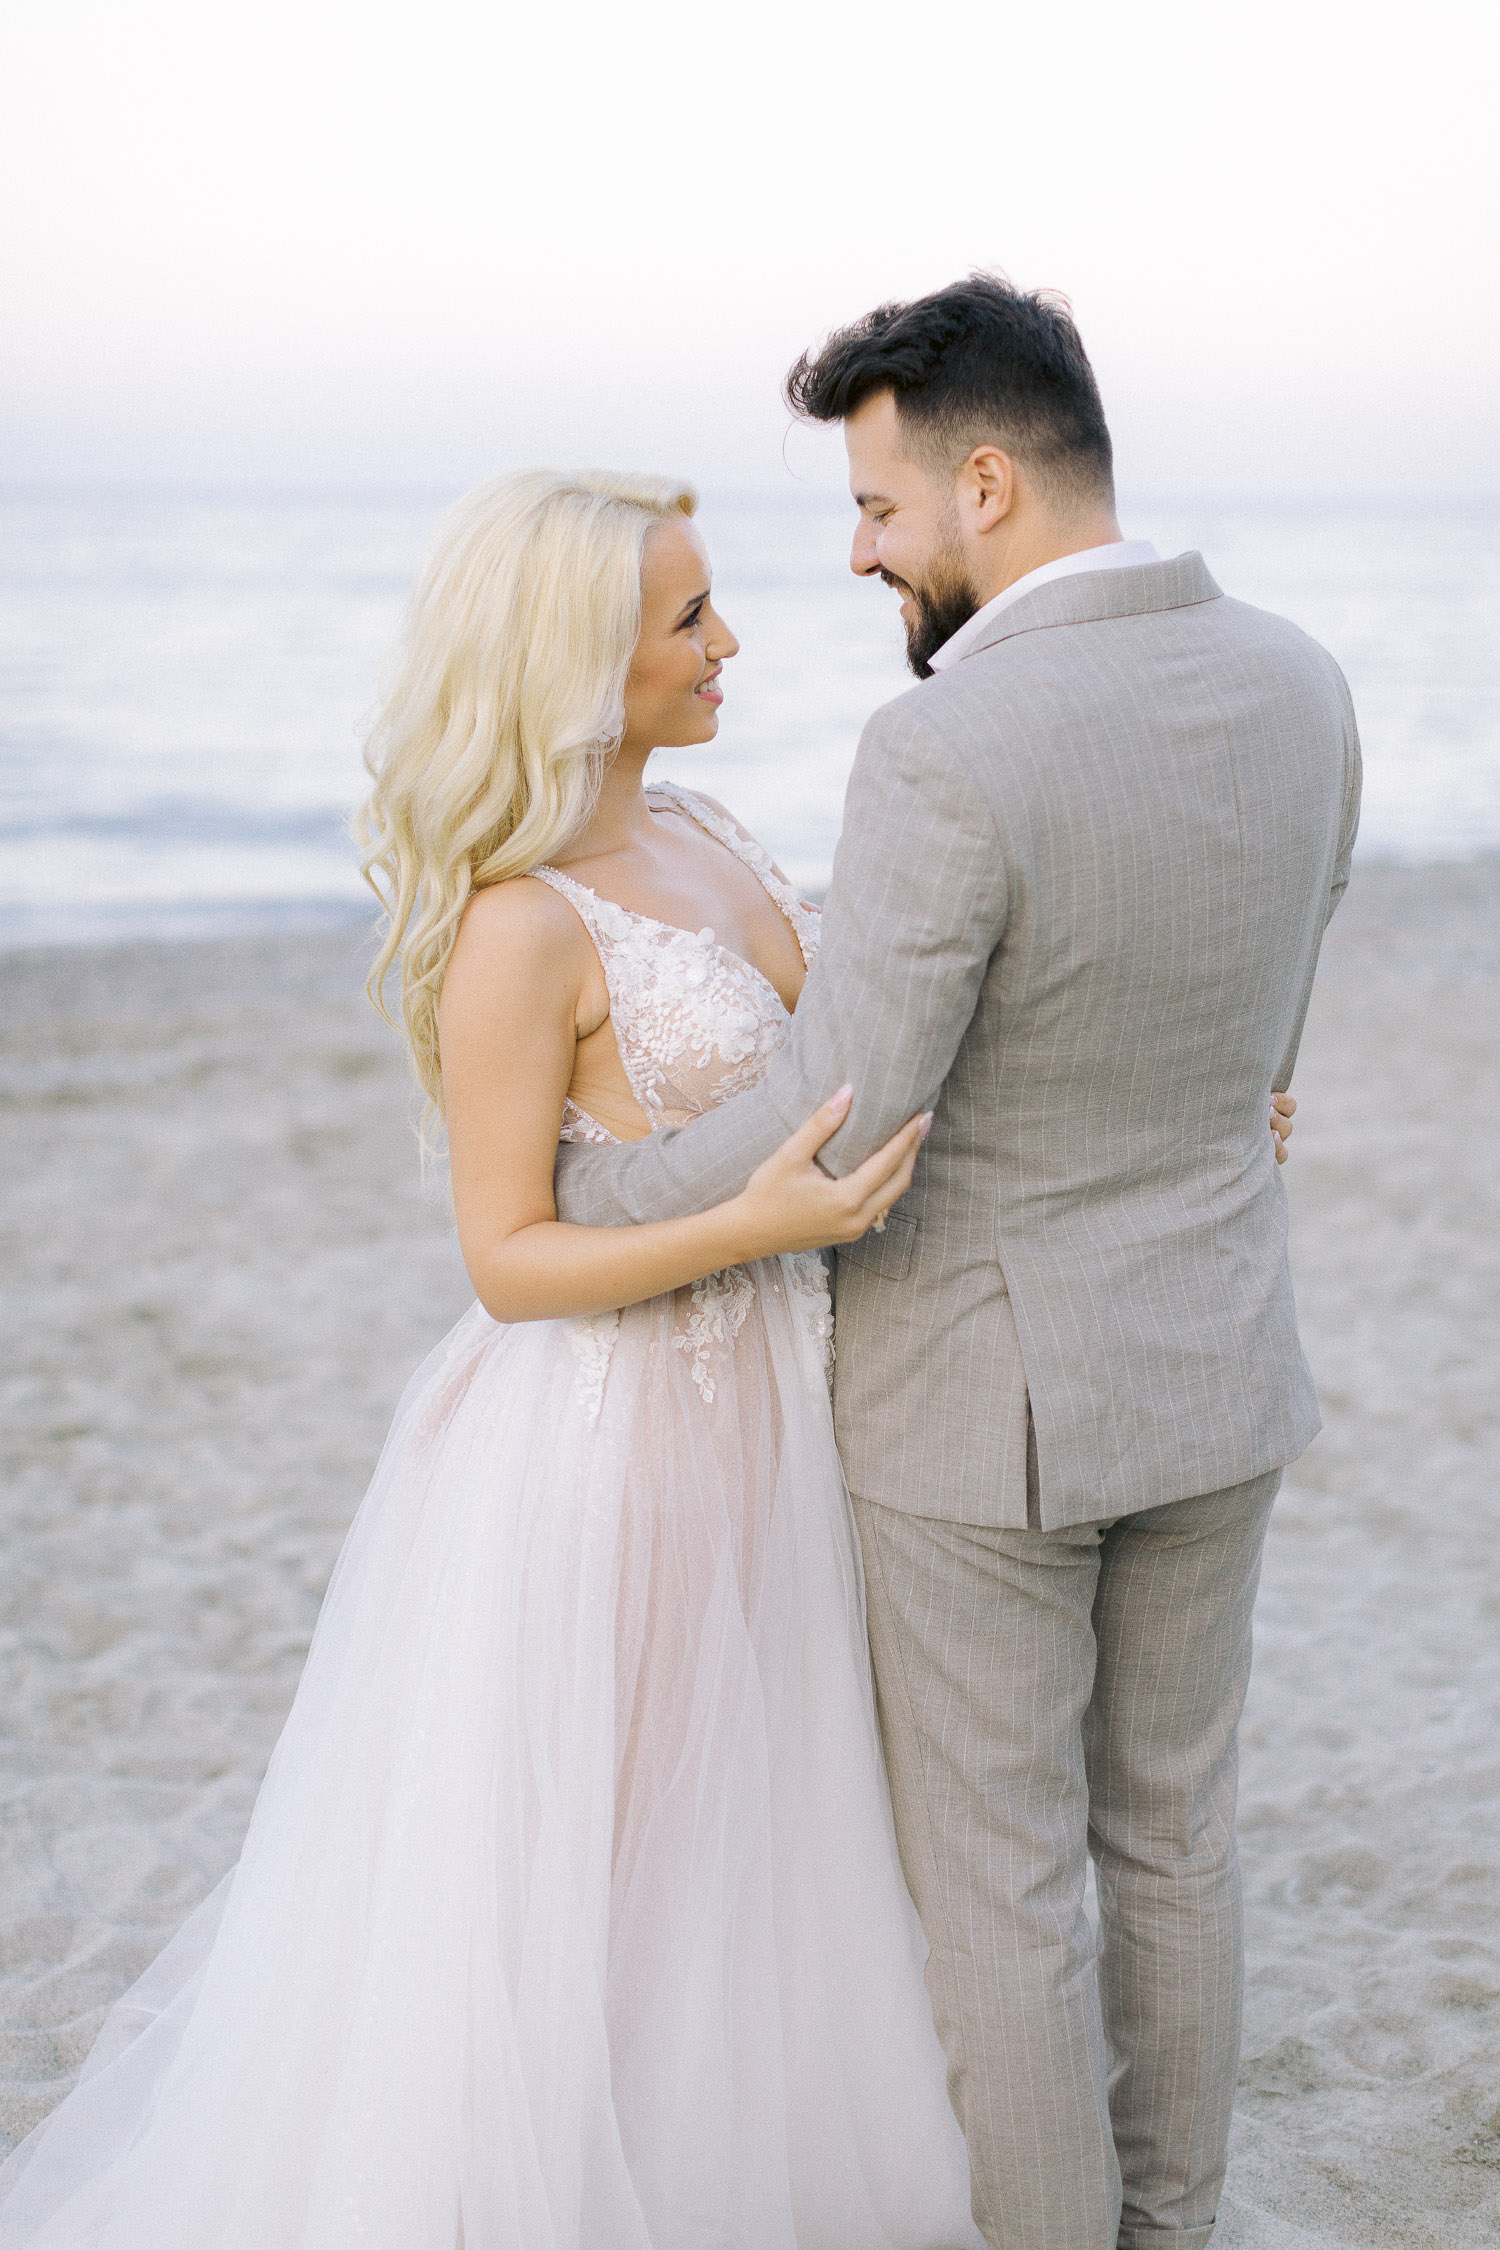 Romantic coastal wedding bride and groom portrait on the beach